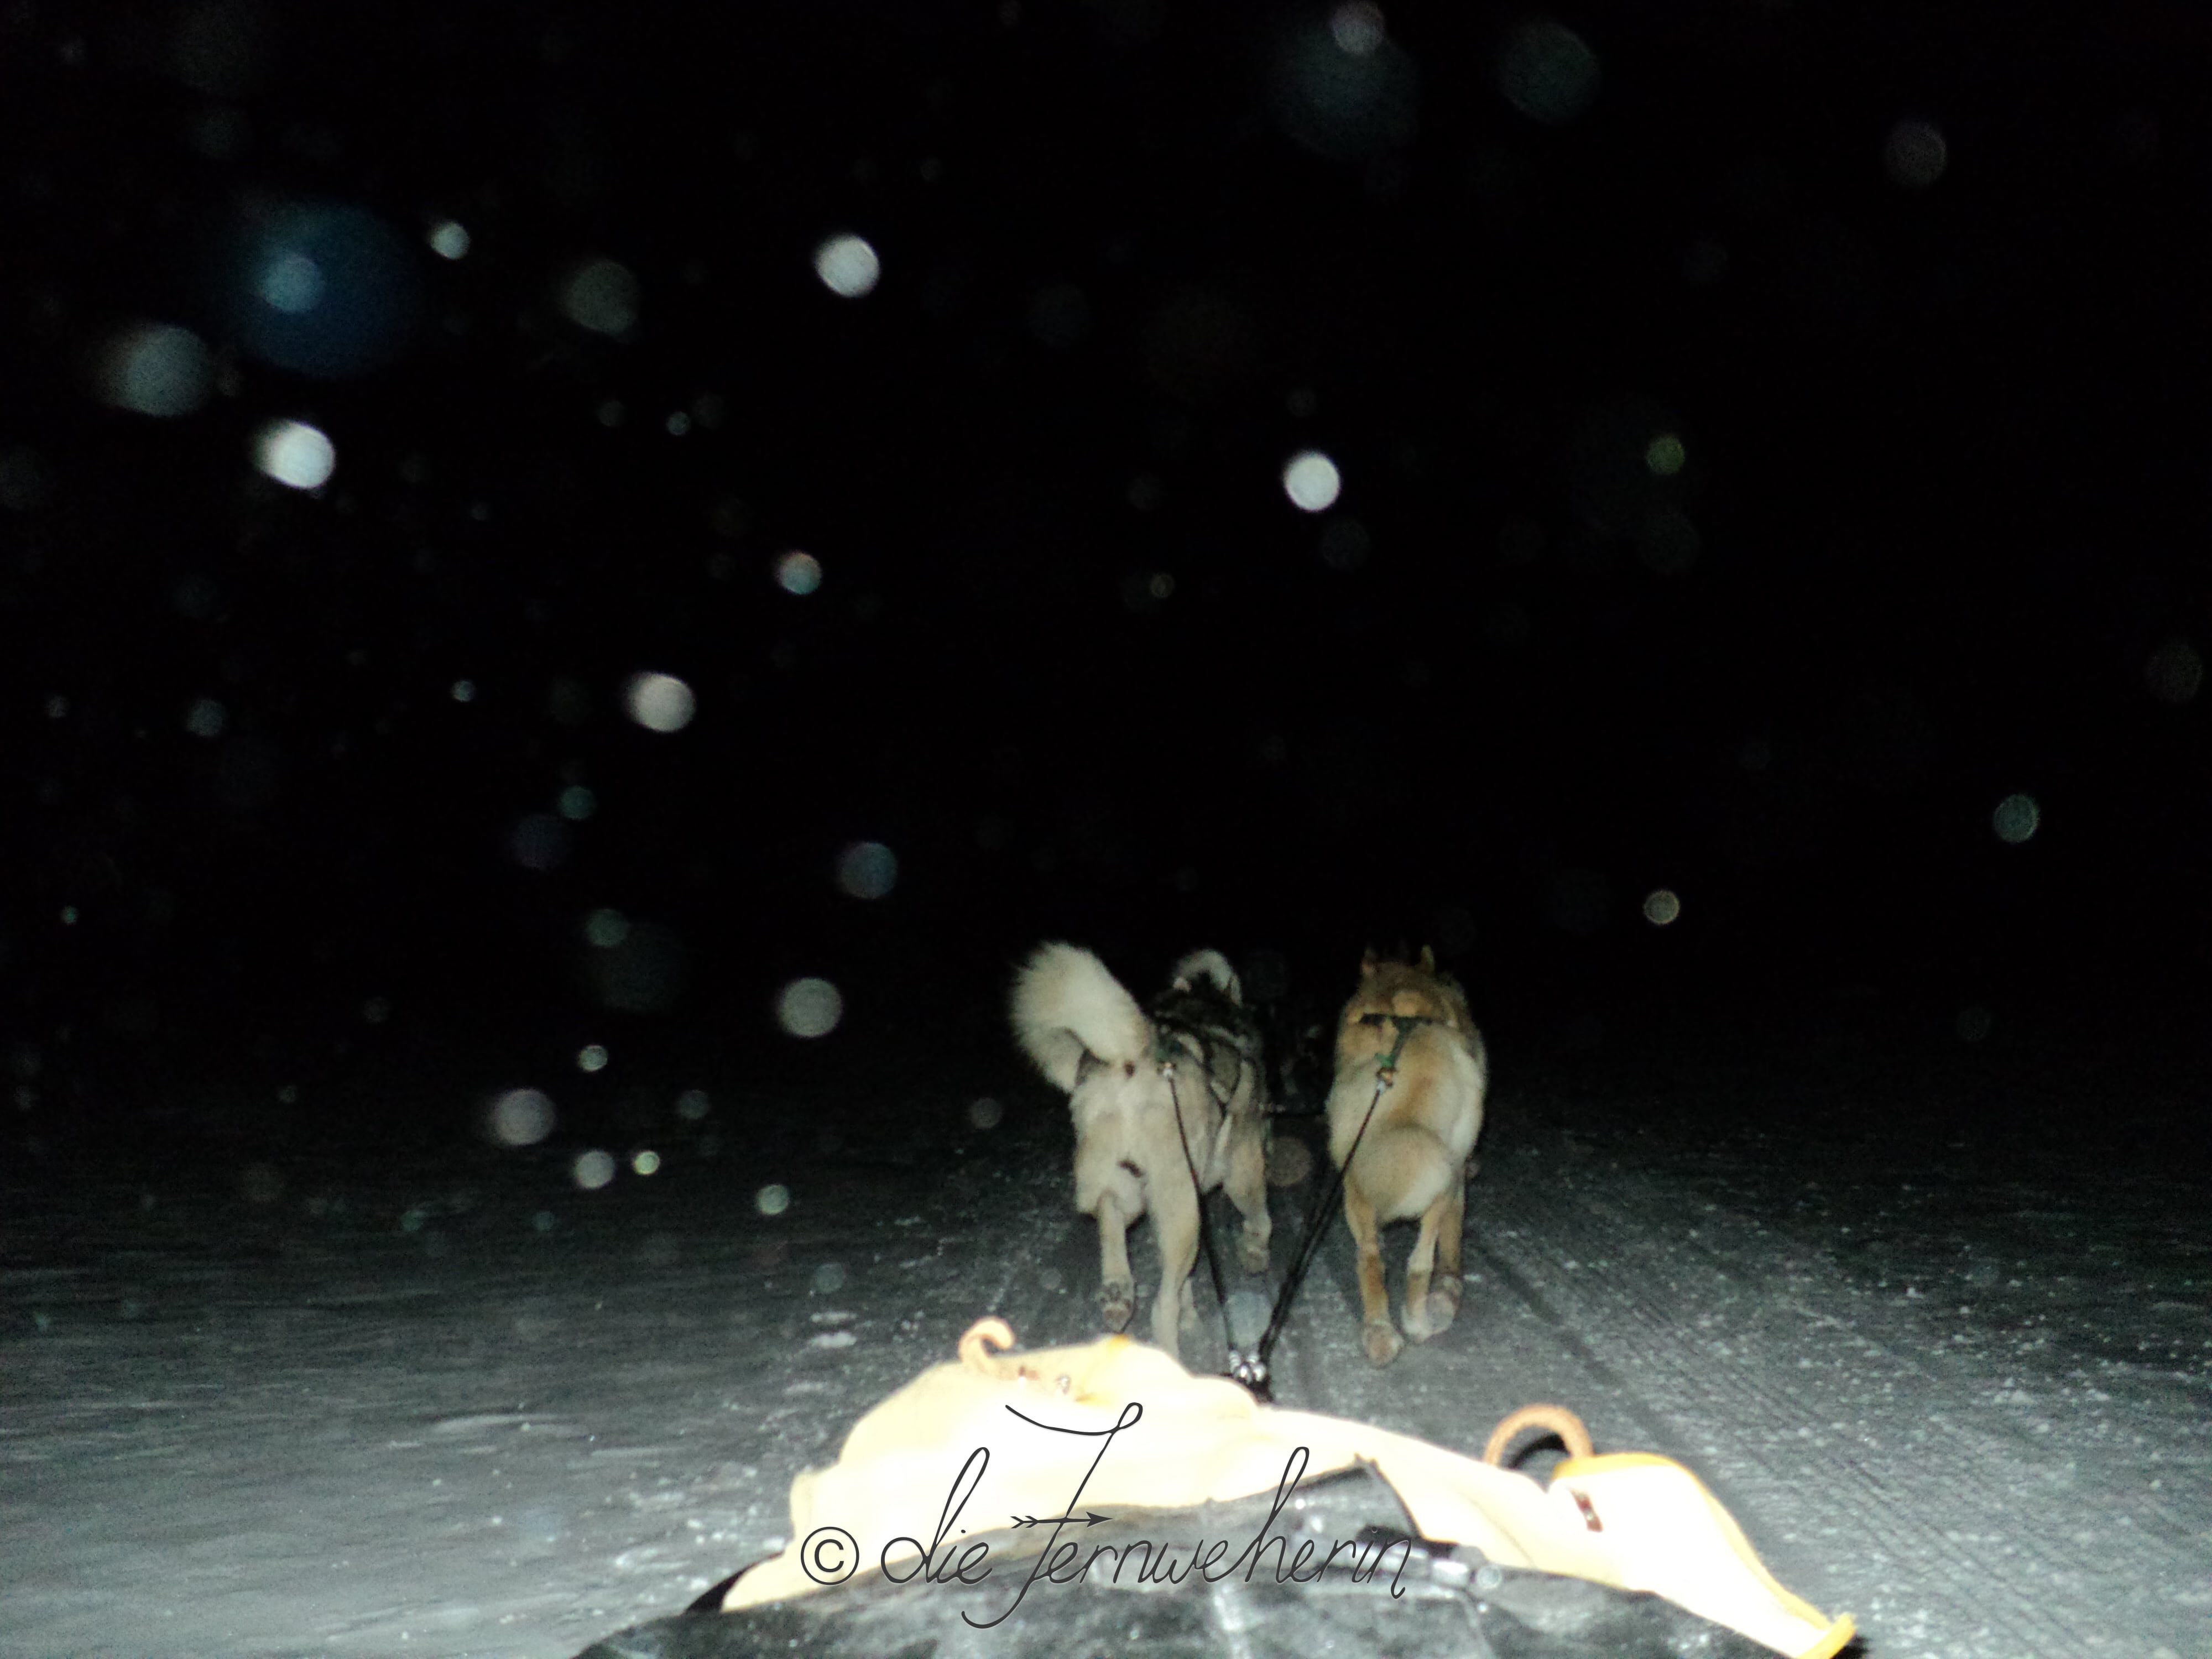 Snowflakes reflect the camera's flash while dogsledding at night.